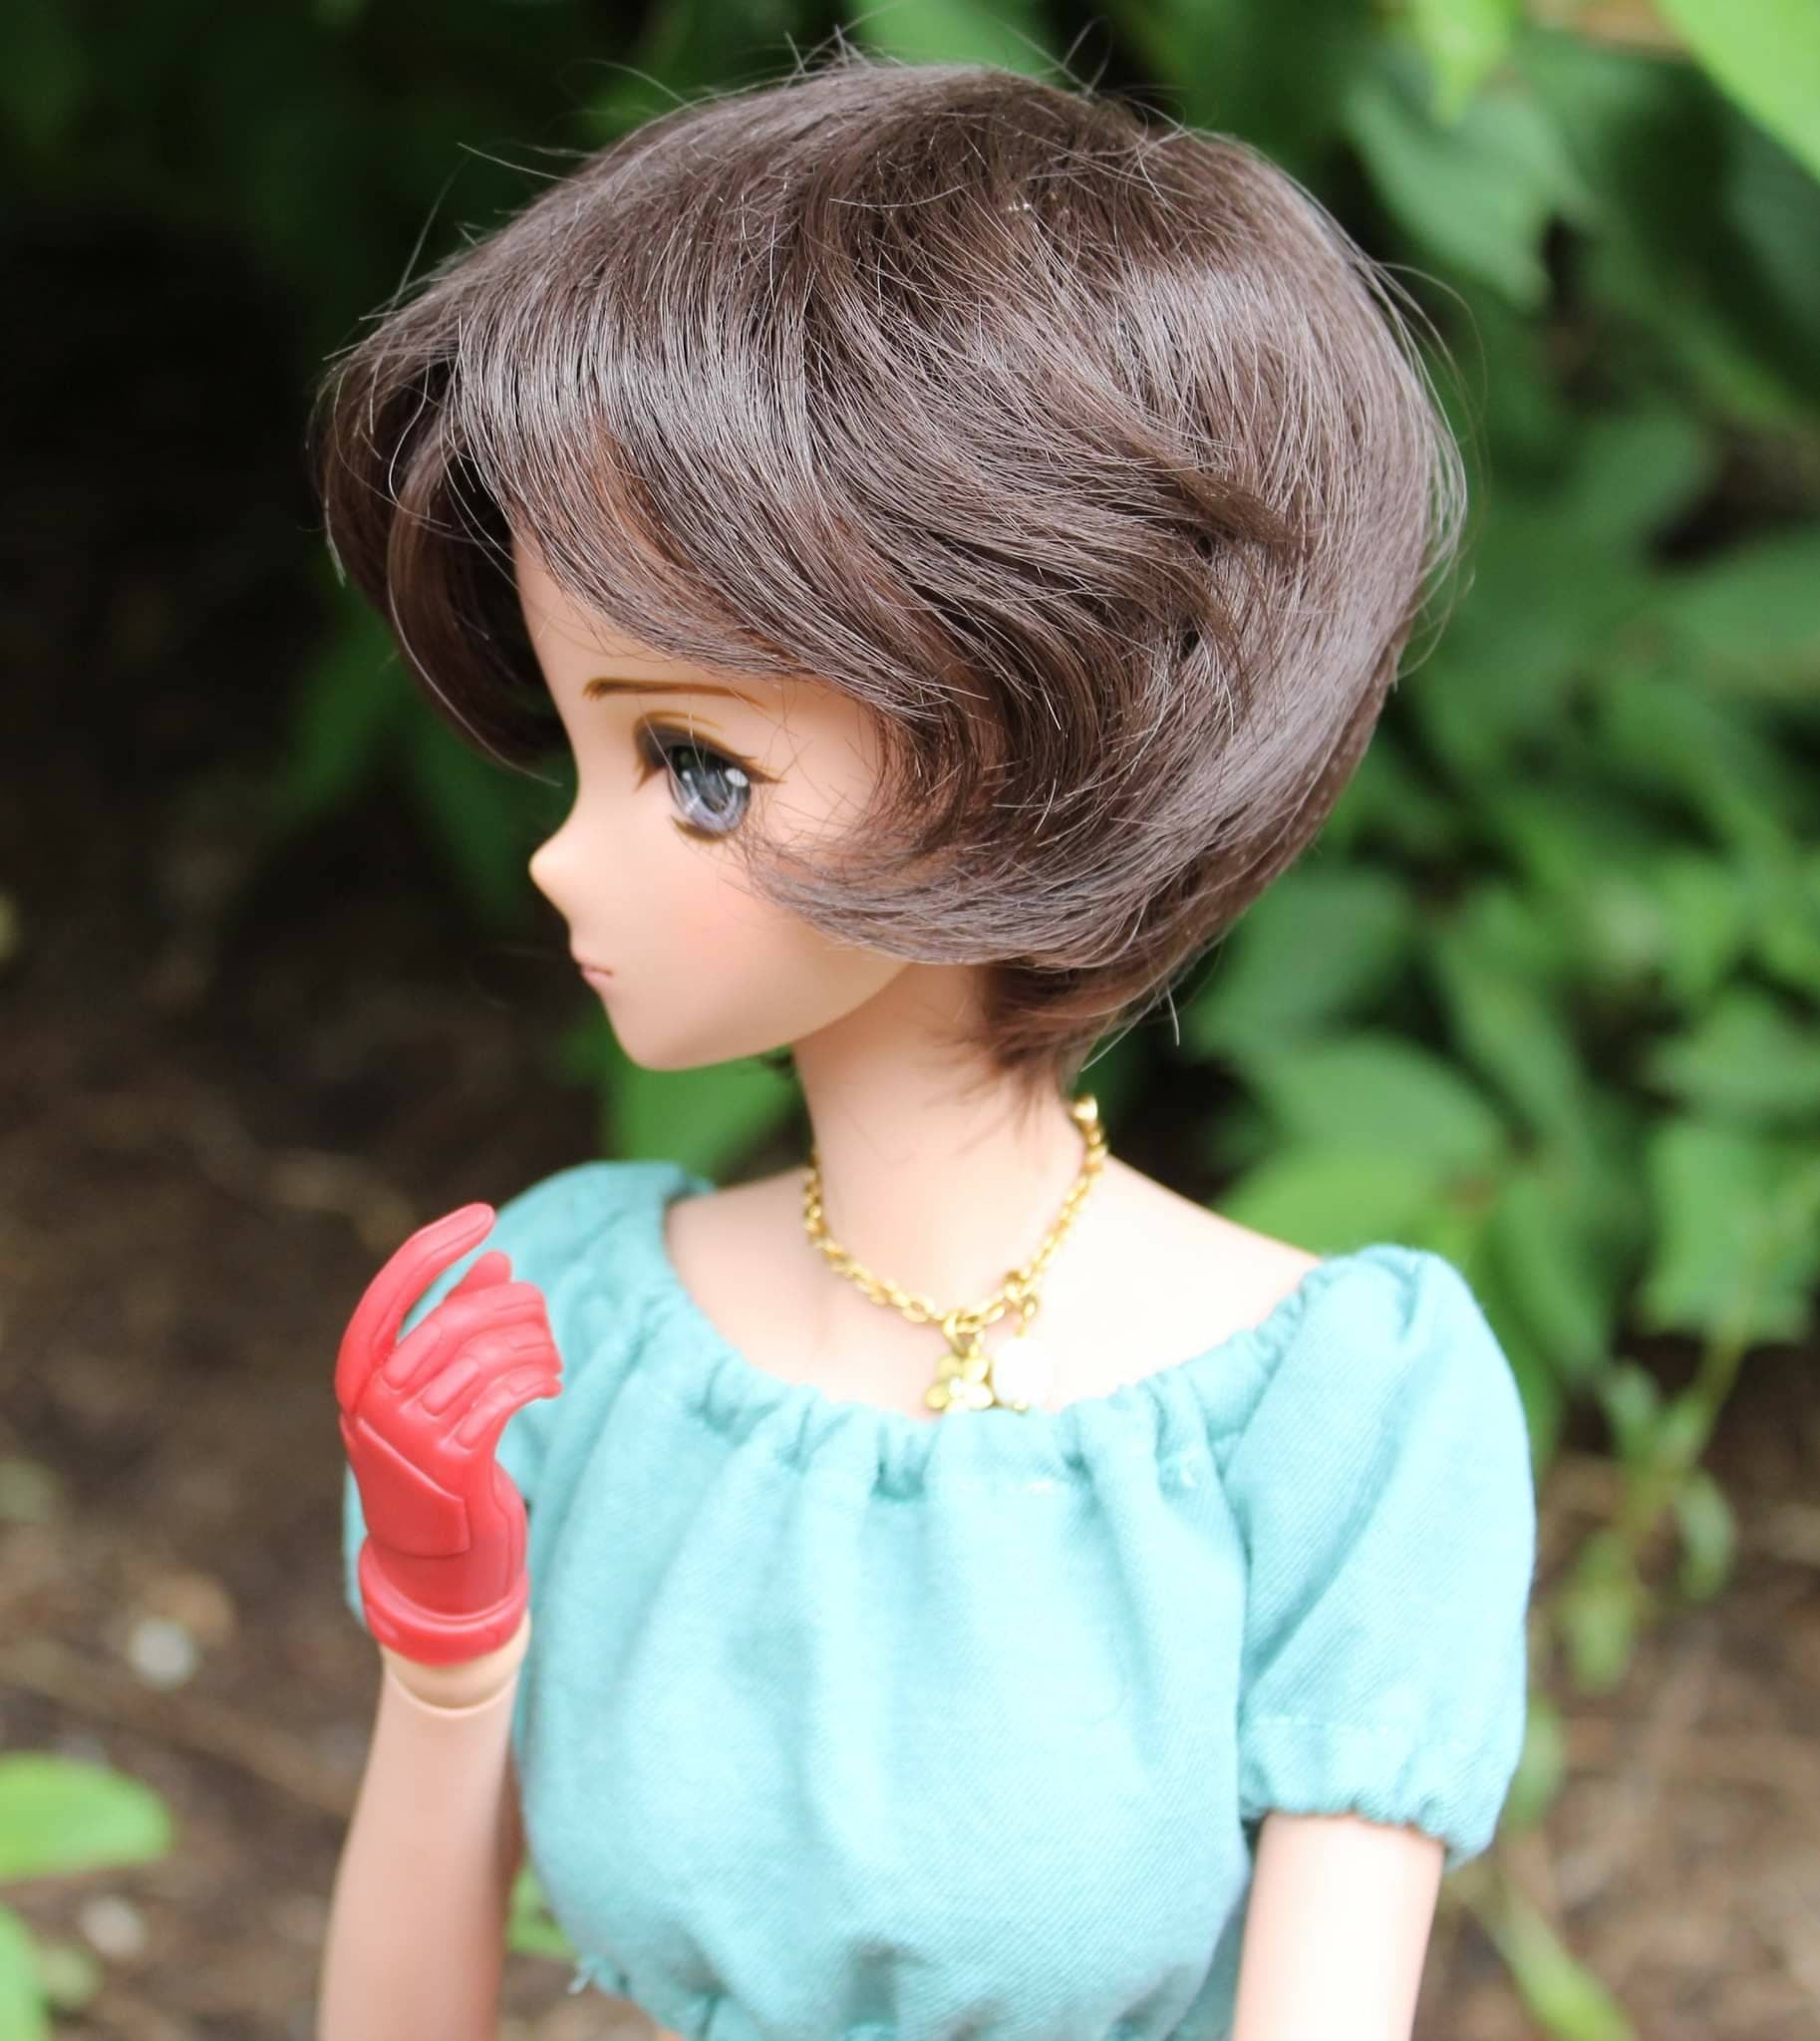 Custom doll Wig for Smart Dolls- Heat Safe - Tangle Resistant- 8.5" head size of Bjd, SD, Dollfie Dream dolls Brown Pixie